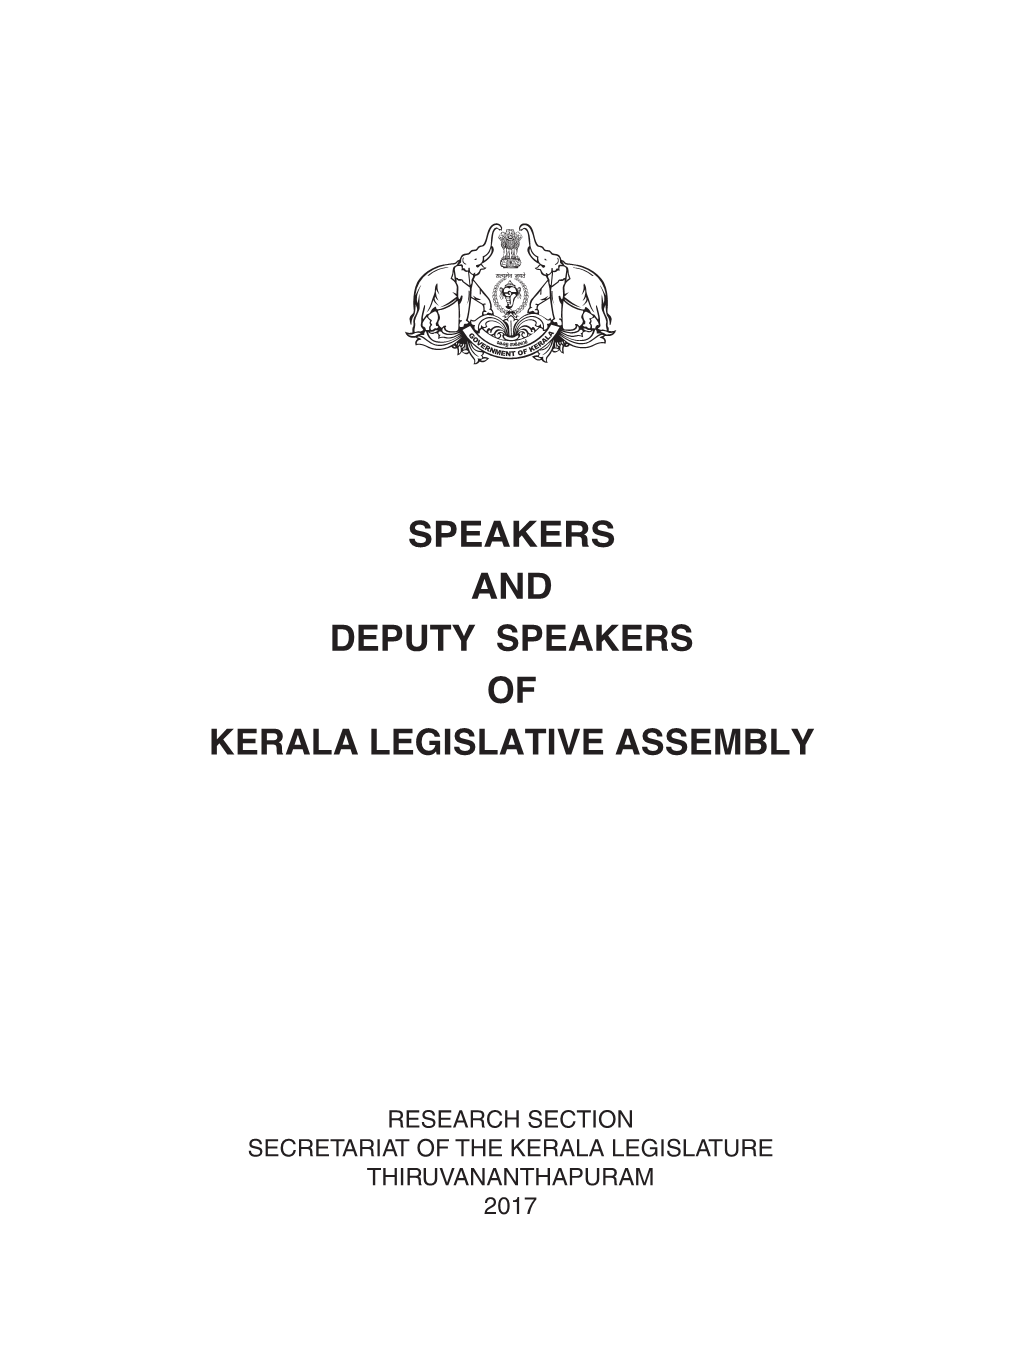 Speakers and Deputy Speakers of Kerala Legislative Assembly